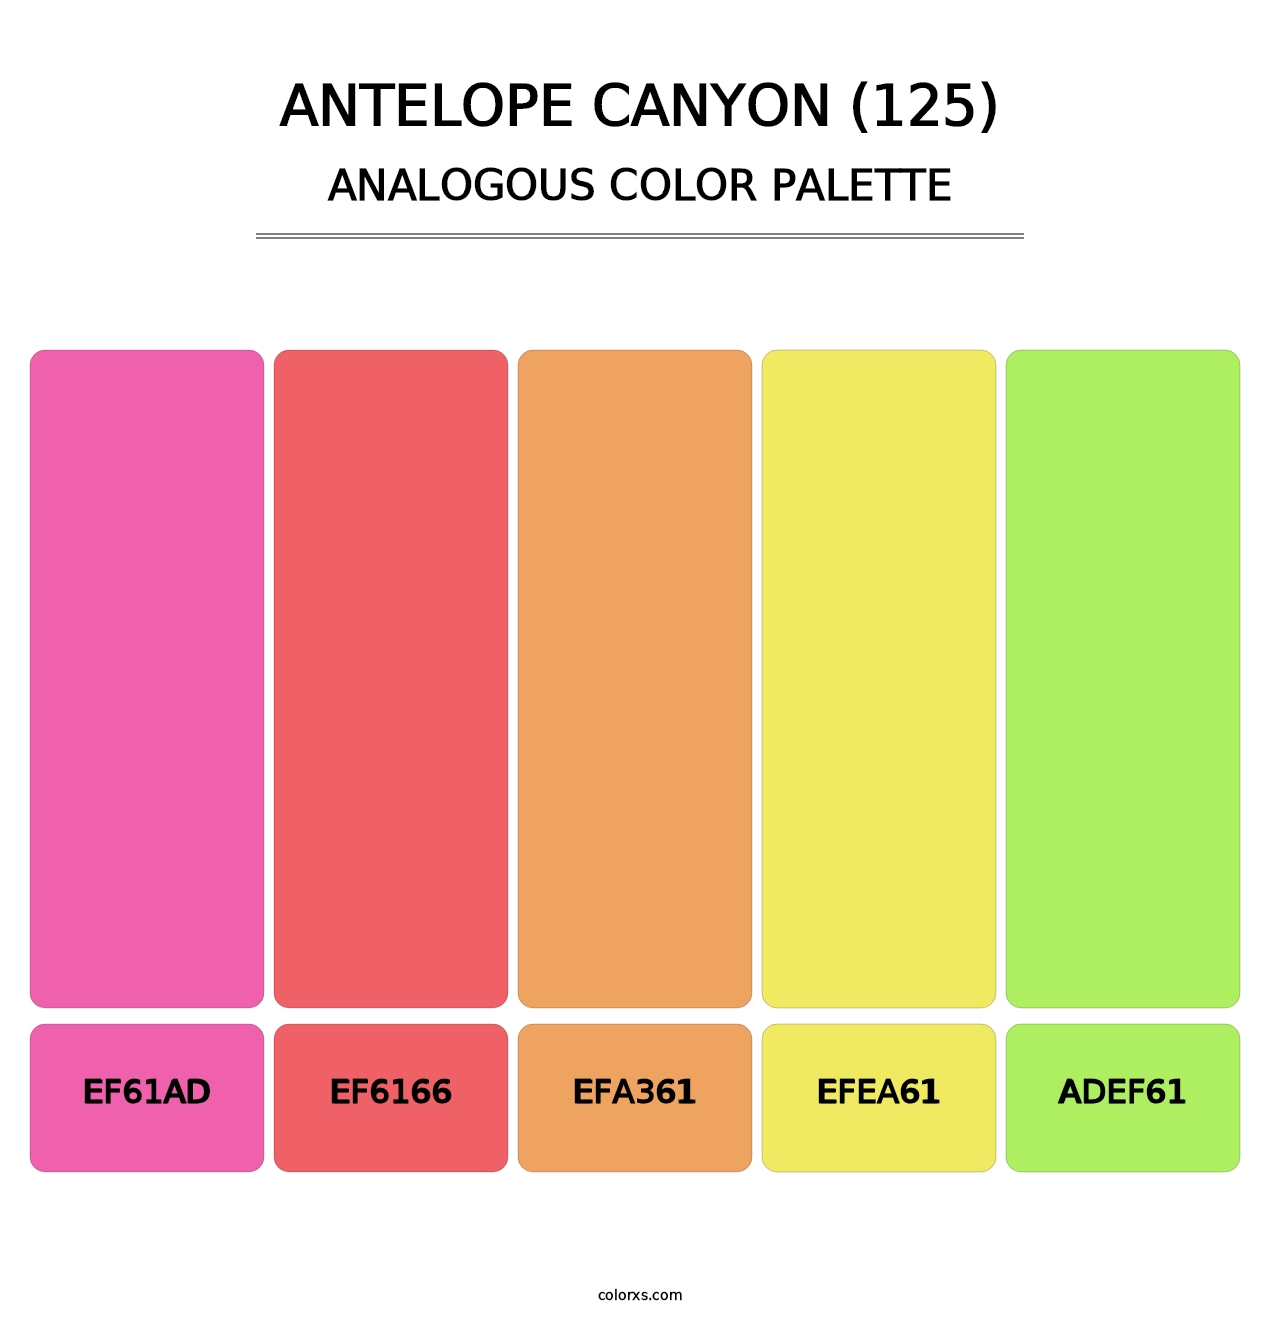 Antelope Canyon (125) - Analogous Color Palette